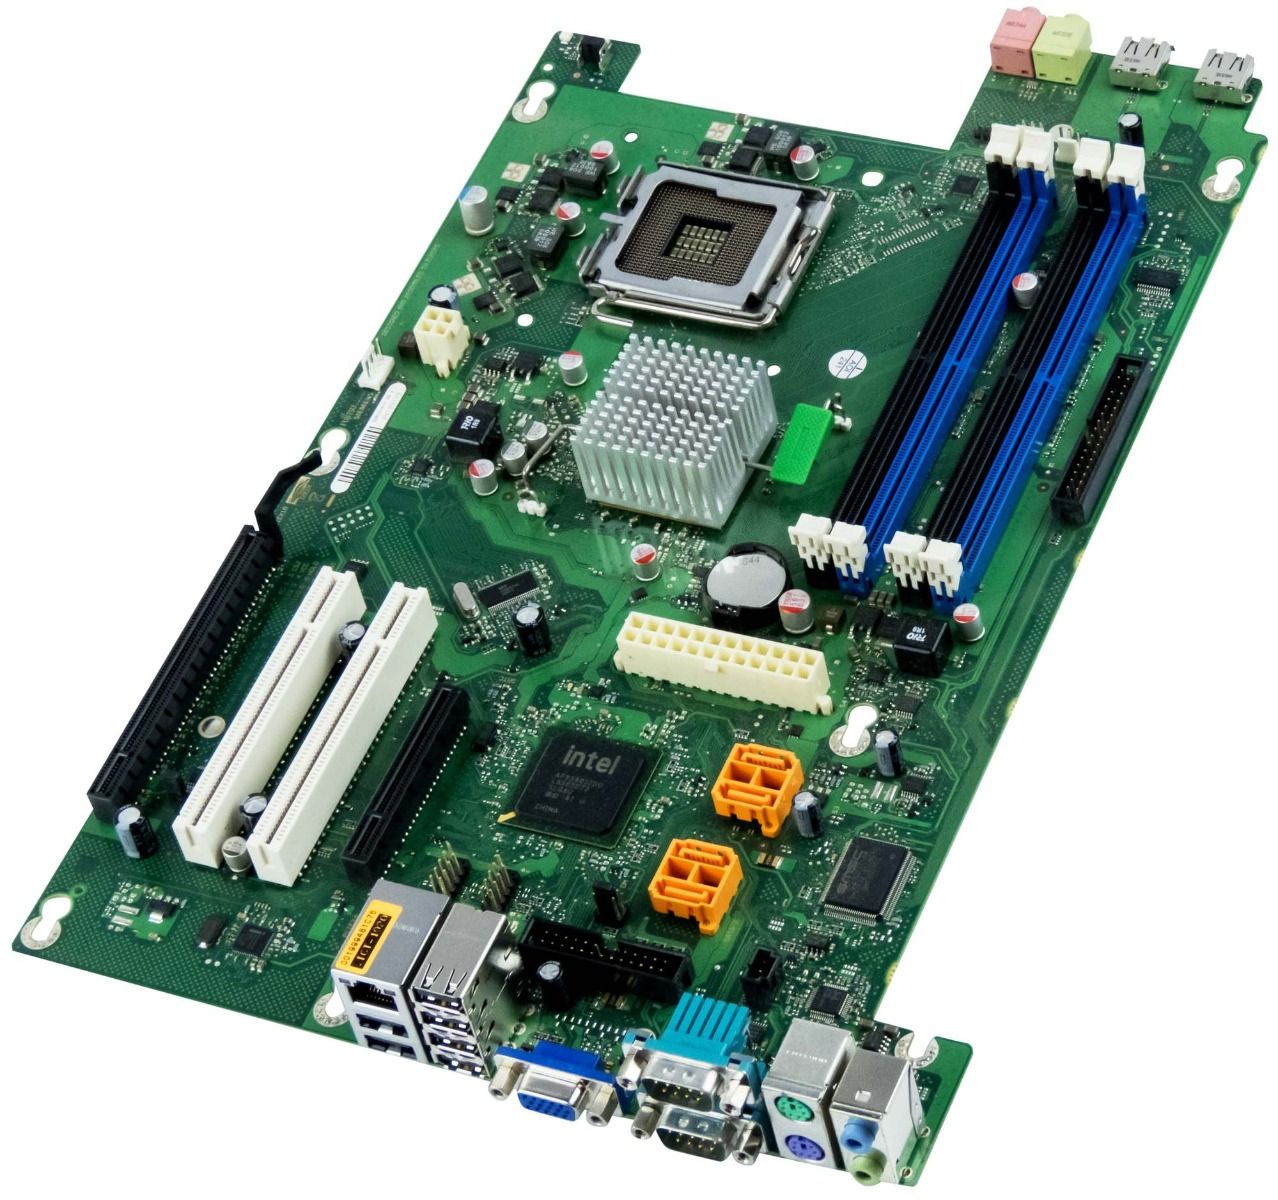 FUJITSU-SIEMENS D2828-A11 GS 3 s775 DDR2 Intel 945g Express E7935E